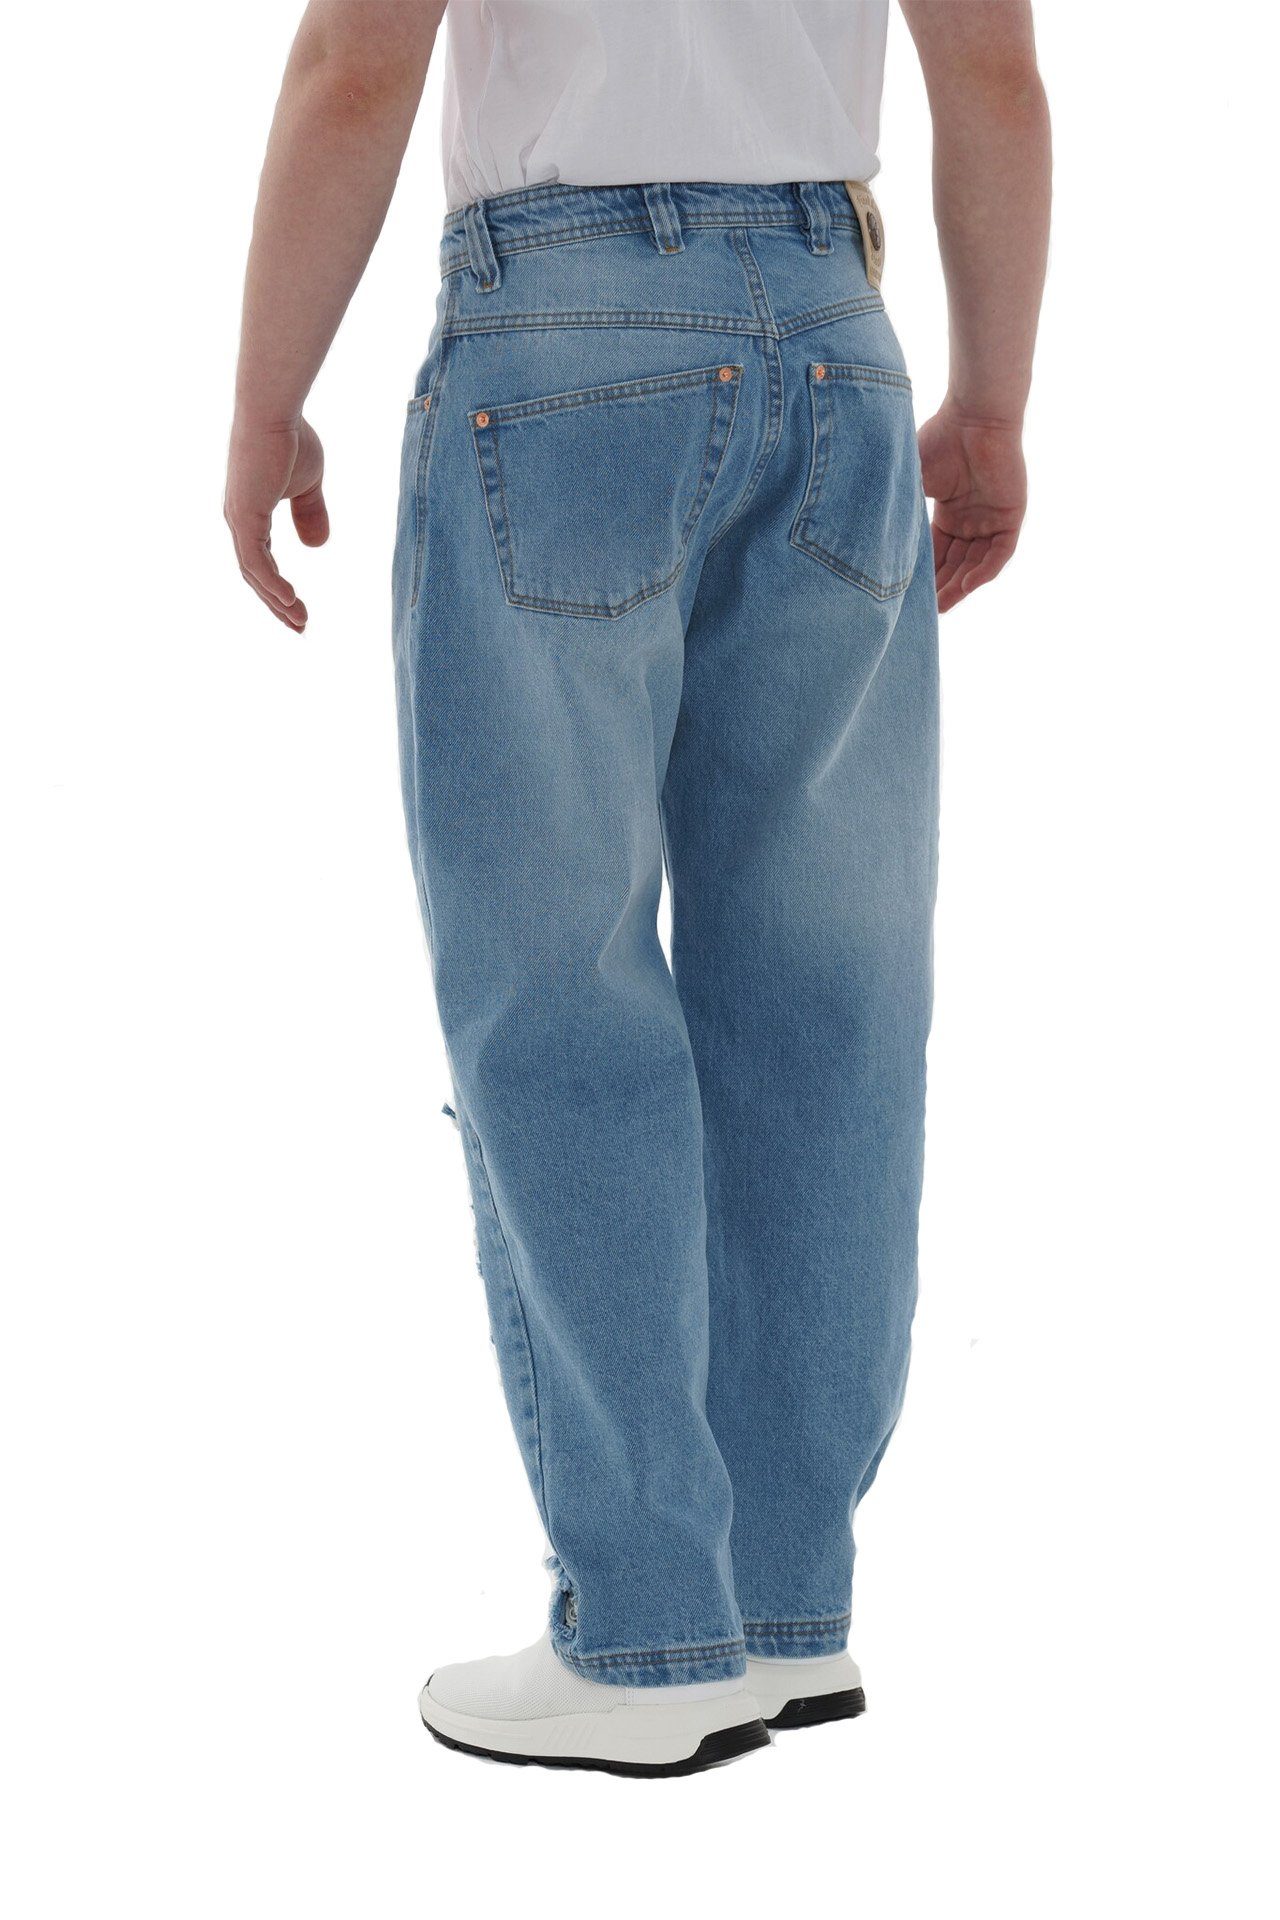 PICALDI Jeans Weite Jeans Fit, Pocket 471 Jeans Five Loose Zicco Raze